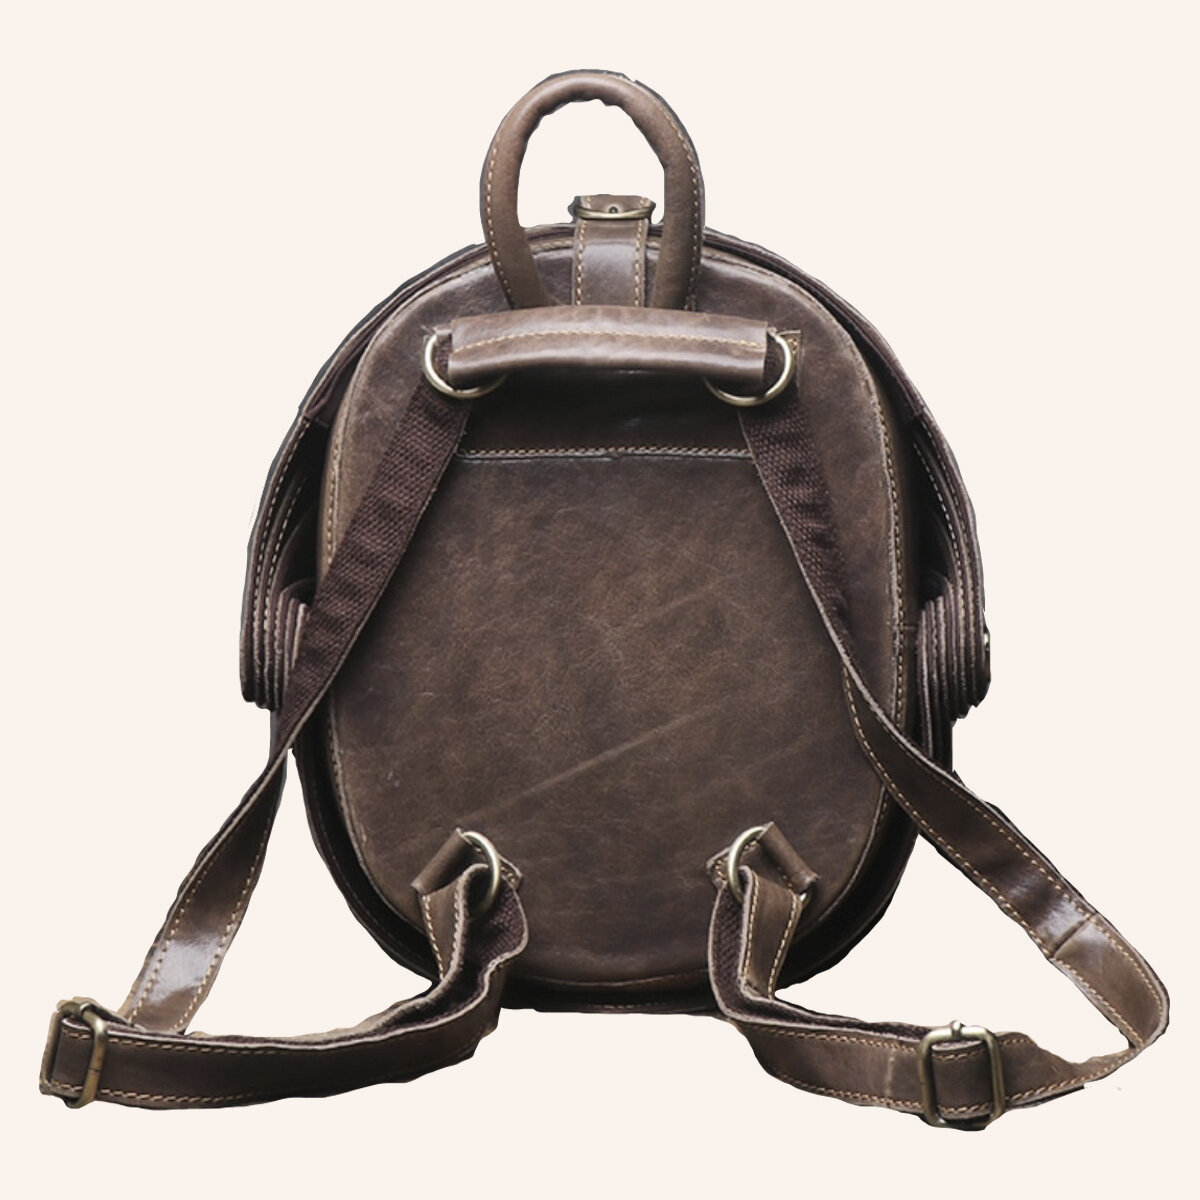 Pangolin Armadillo Leather Backpack Handbag Travel Casual Bag Unisex Black Large 